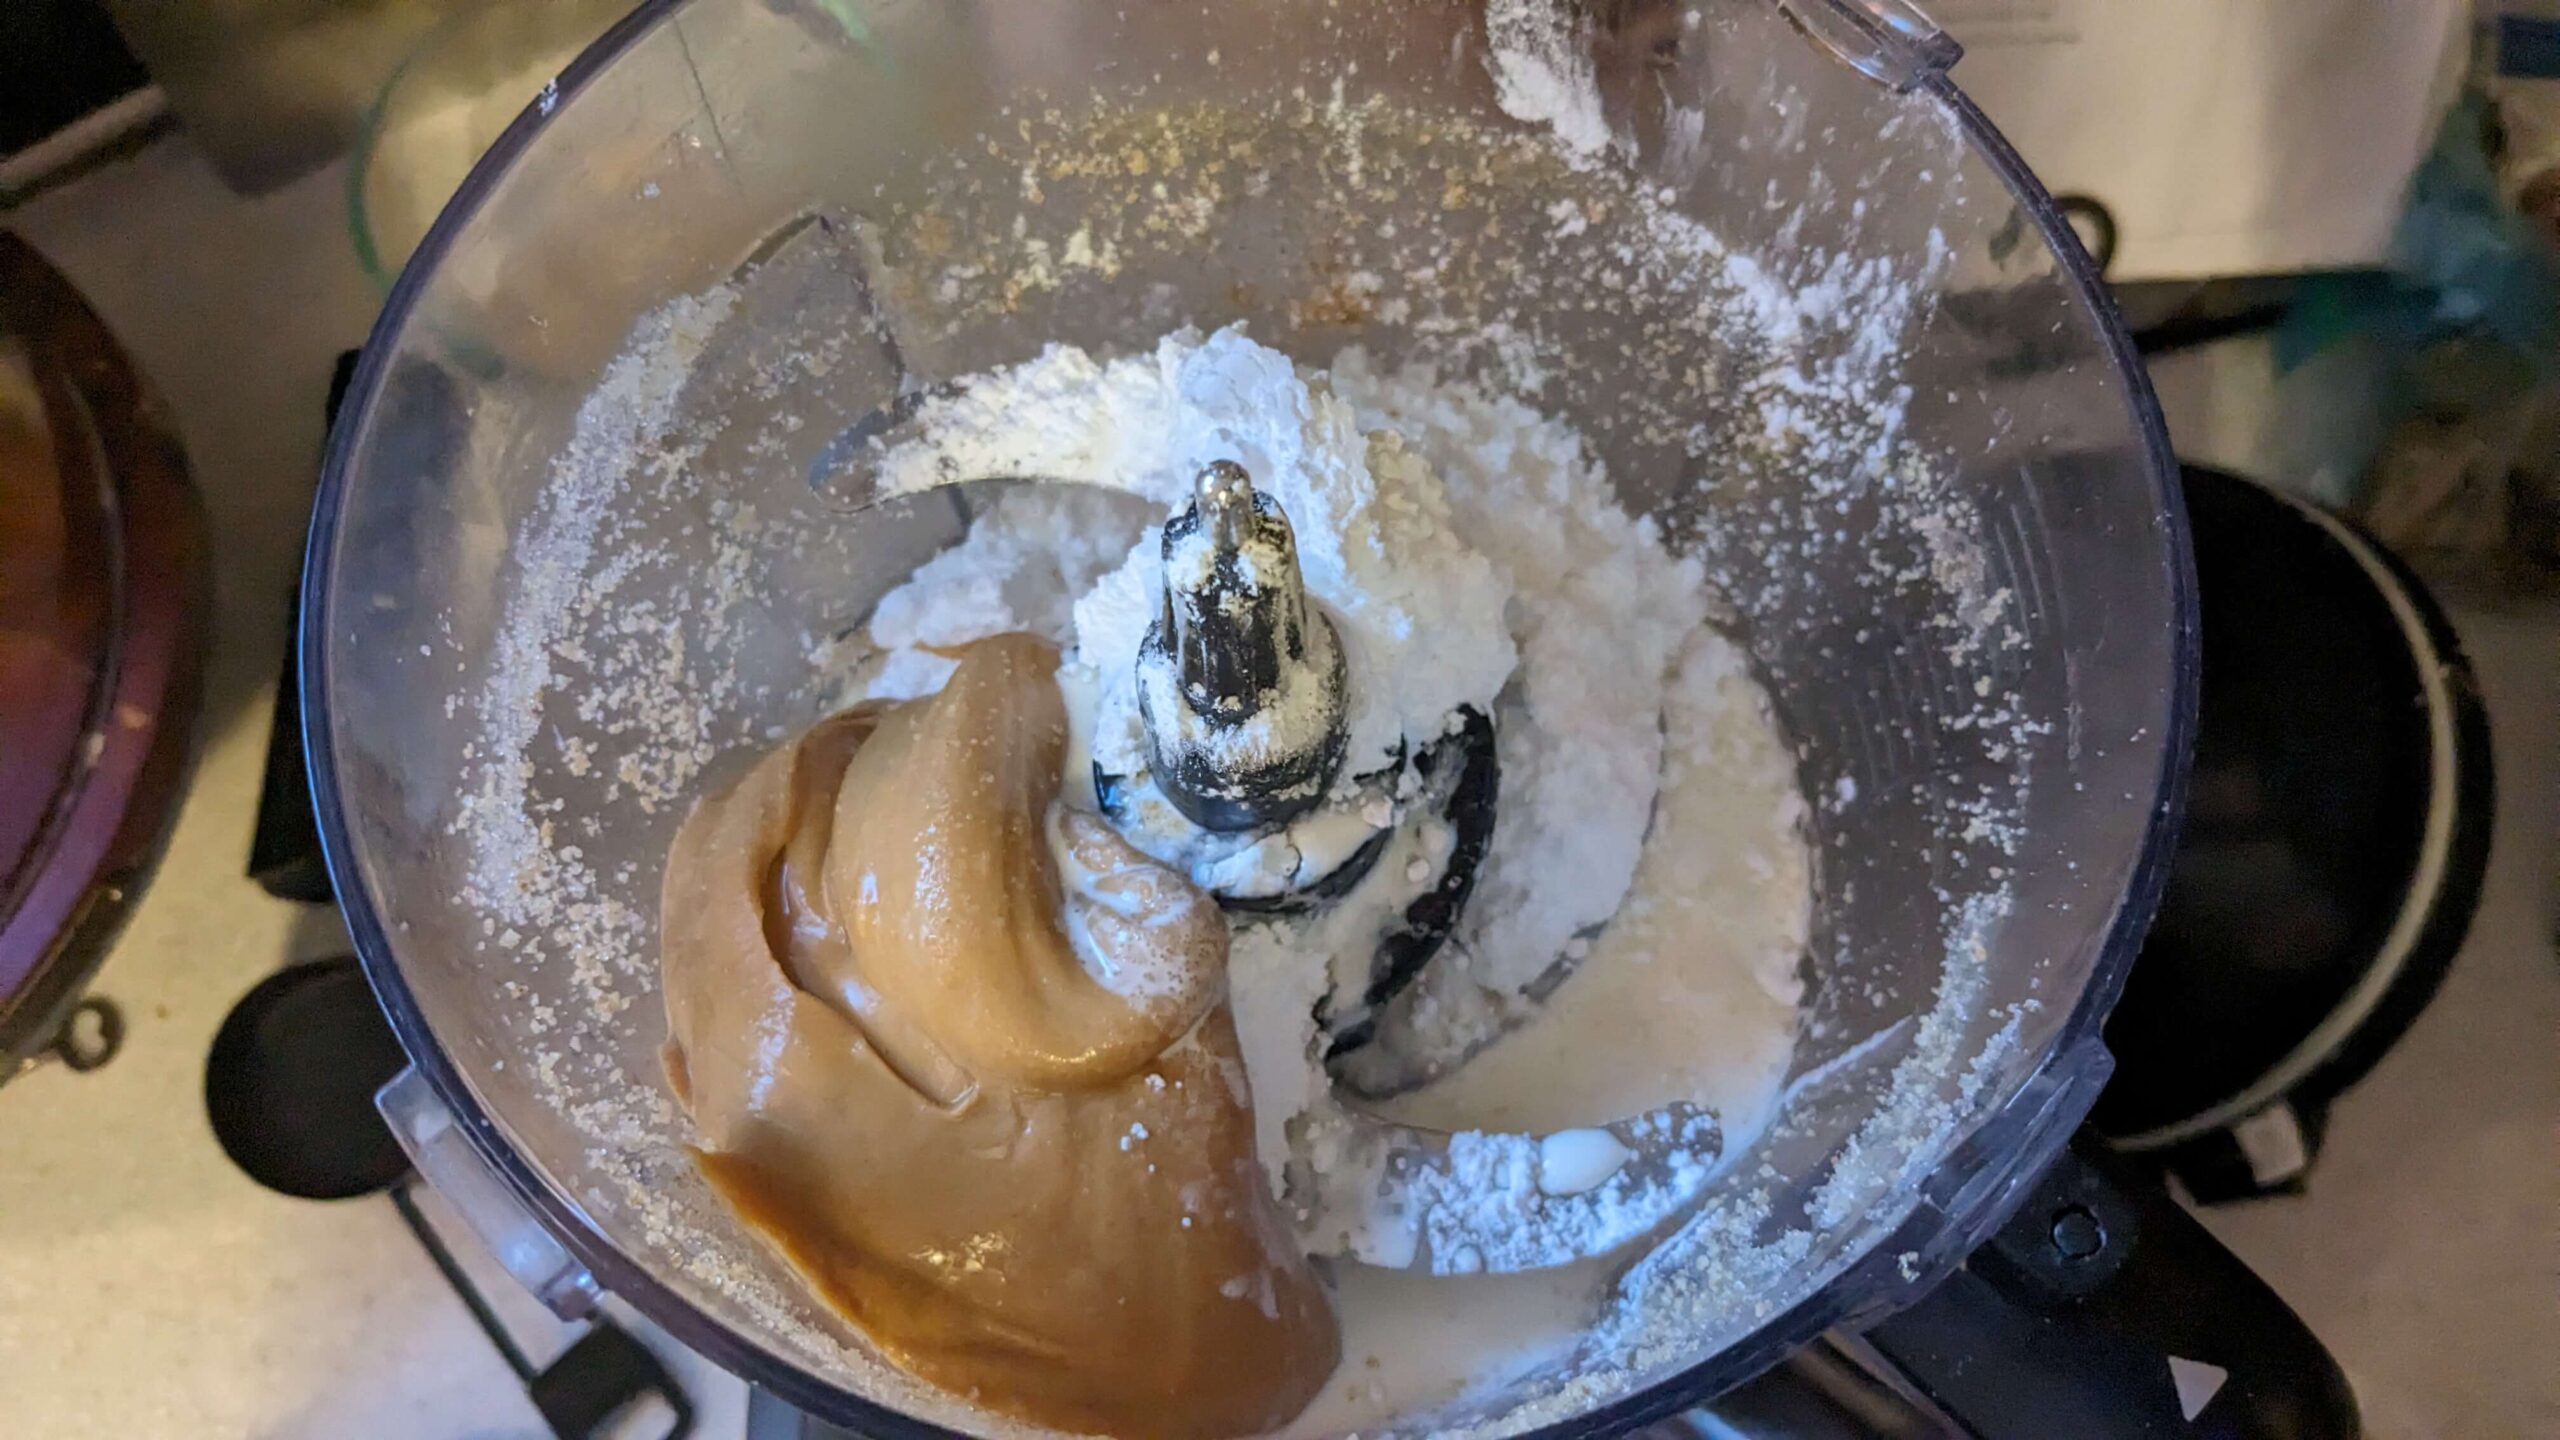 creamy peanut butter and powdered sugar in a food processor